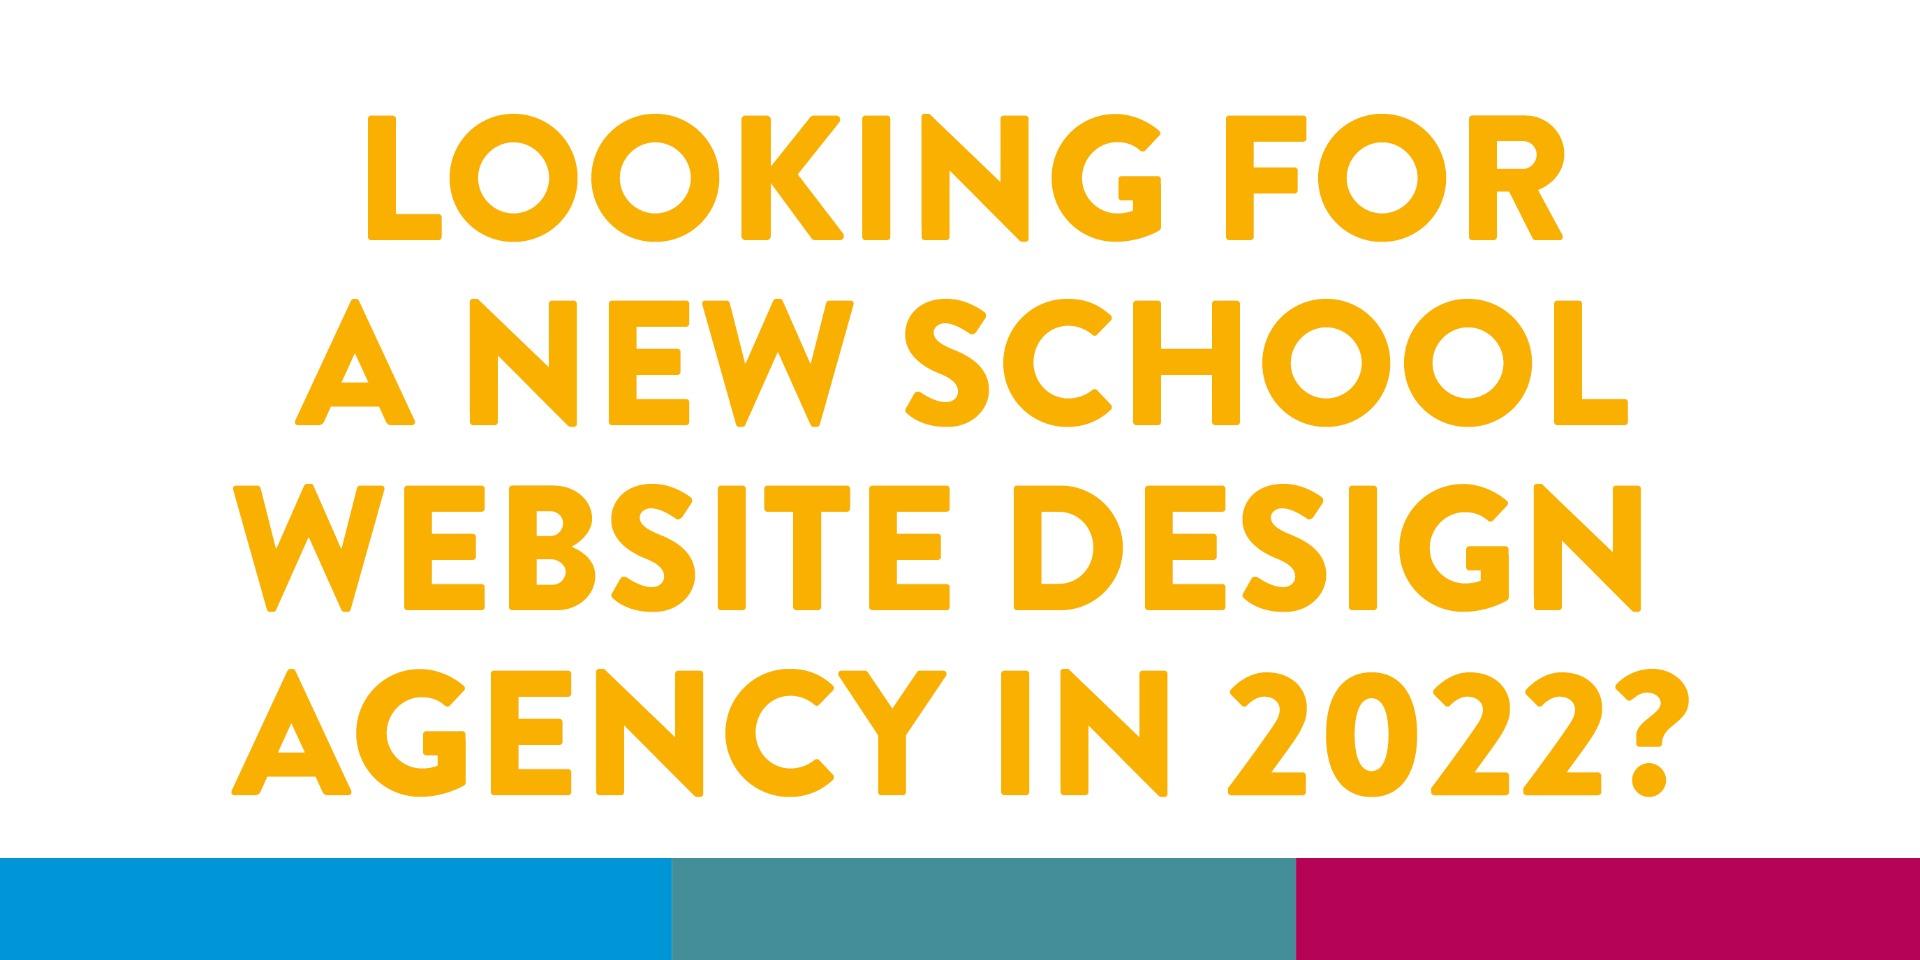 Looking For A New School Website Design Agency In 2022?